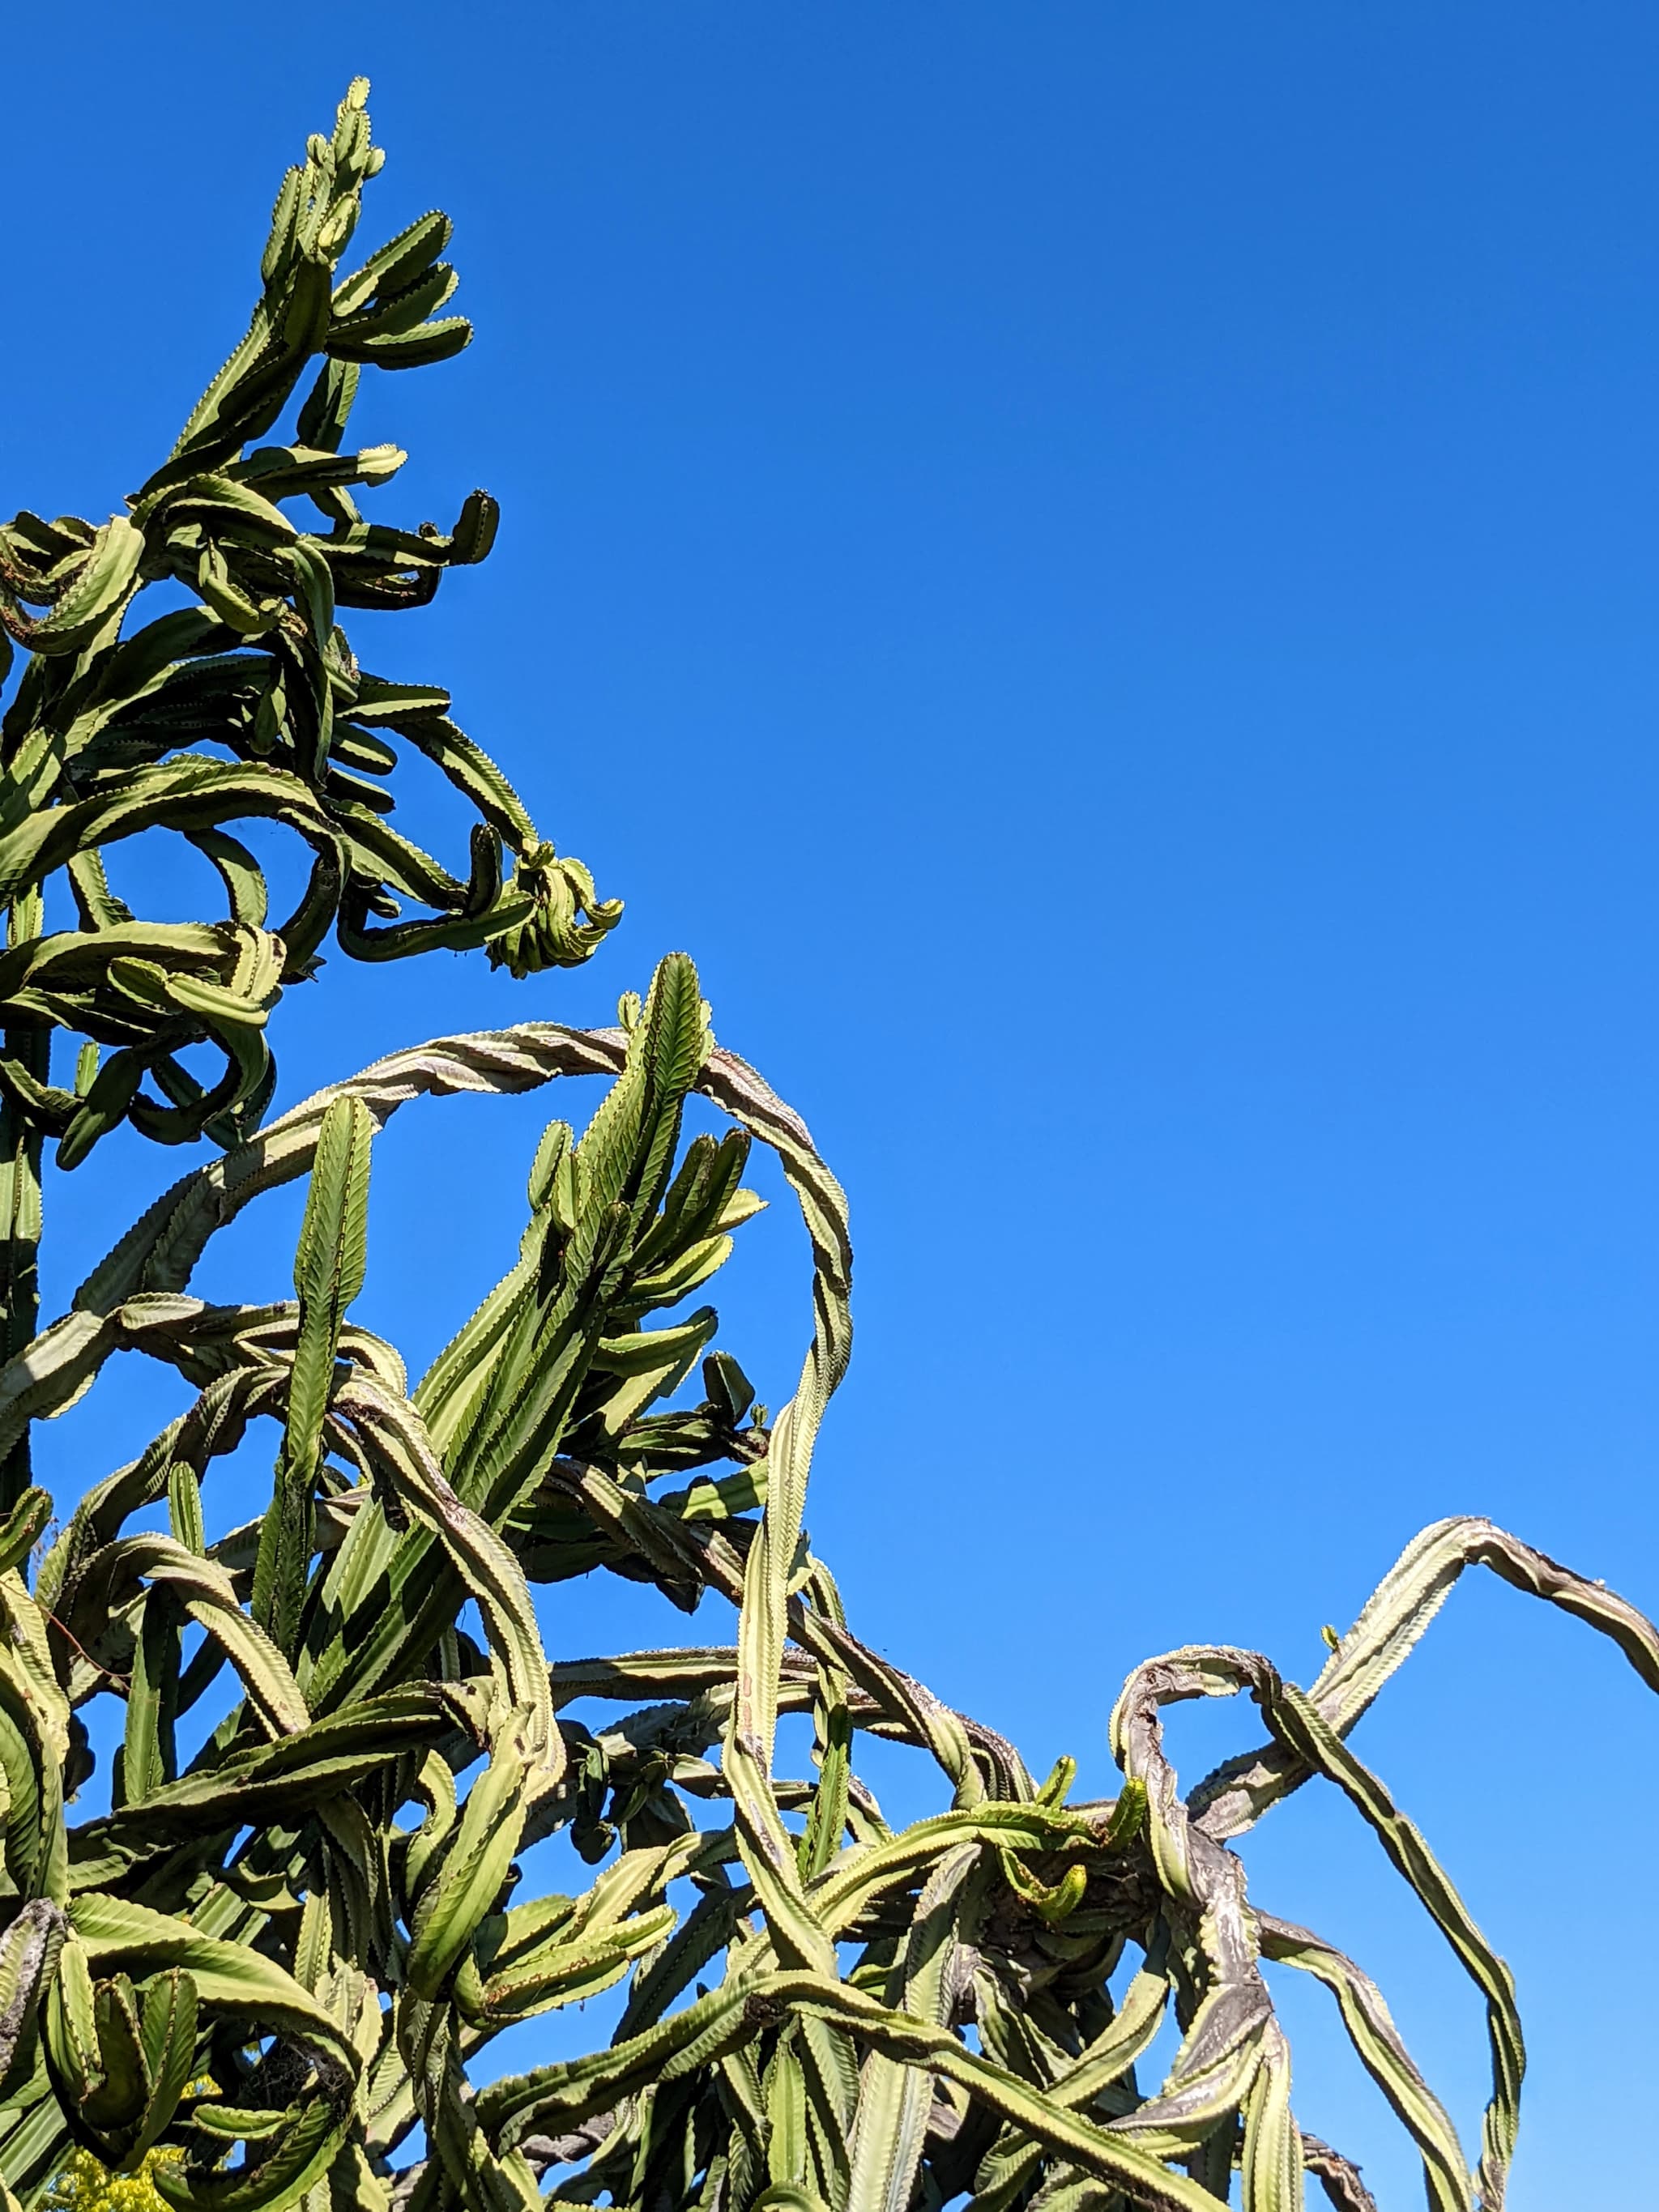 windy cactus sprawling across a blue sky.